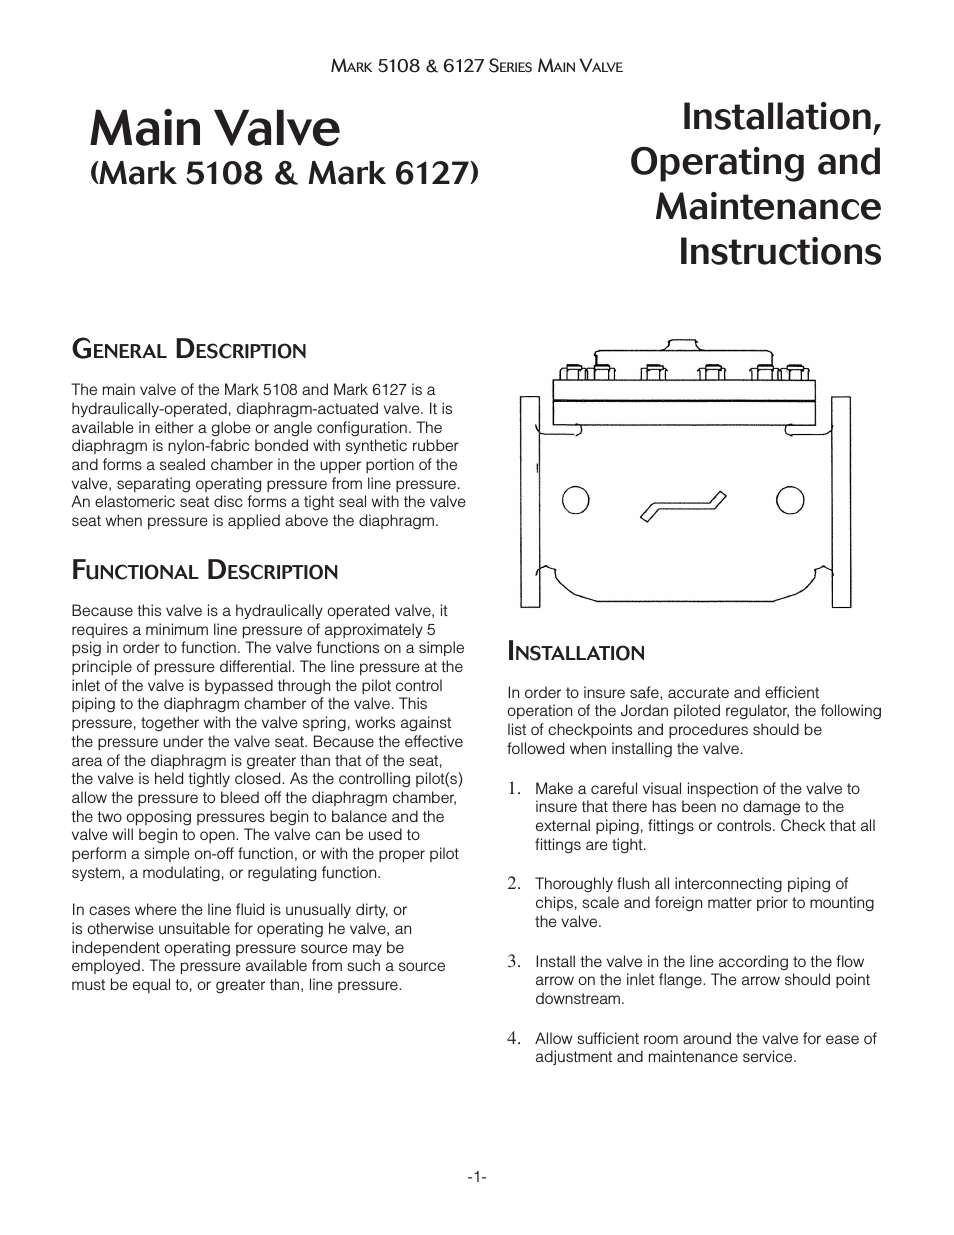 Mark 6127 Series Pressure Reducing Valves